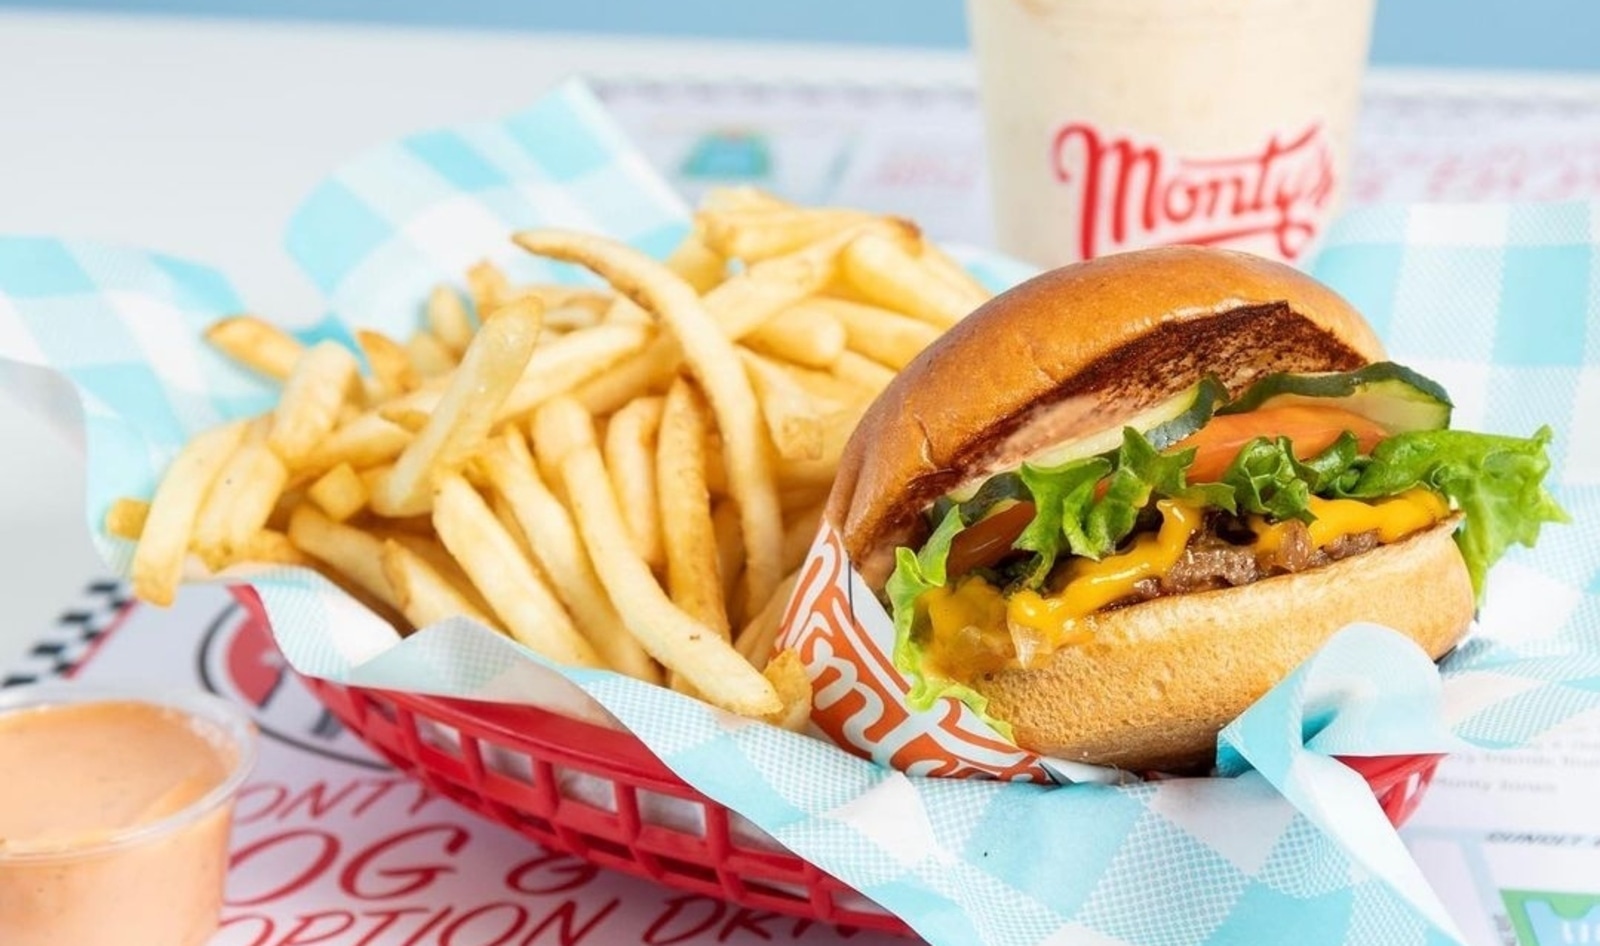 16 Juicy Vegan Burgers That Are Way Better Than the Big Mac